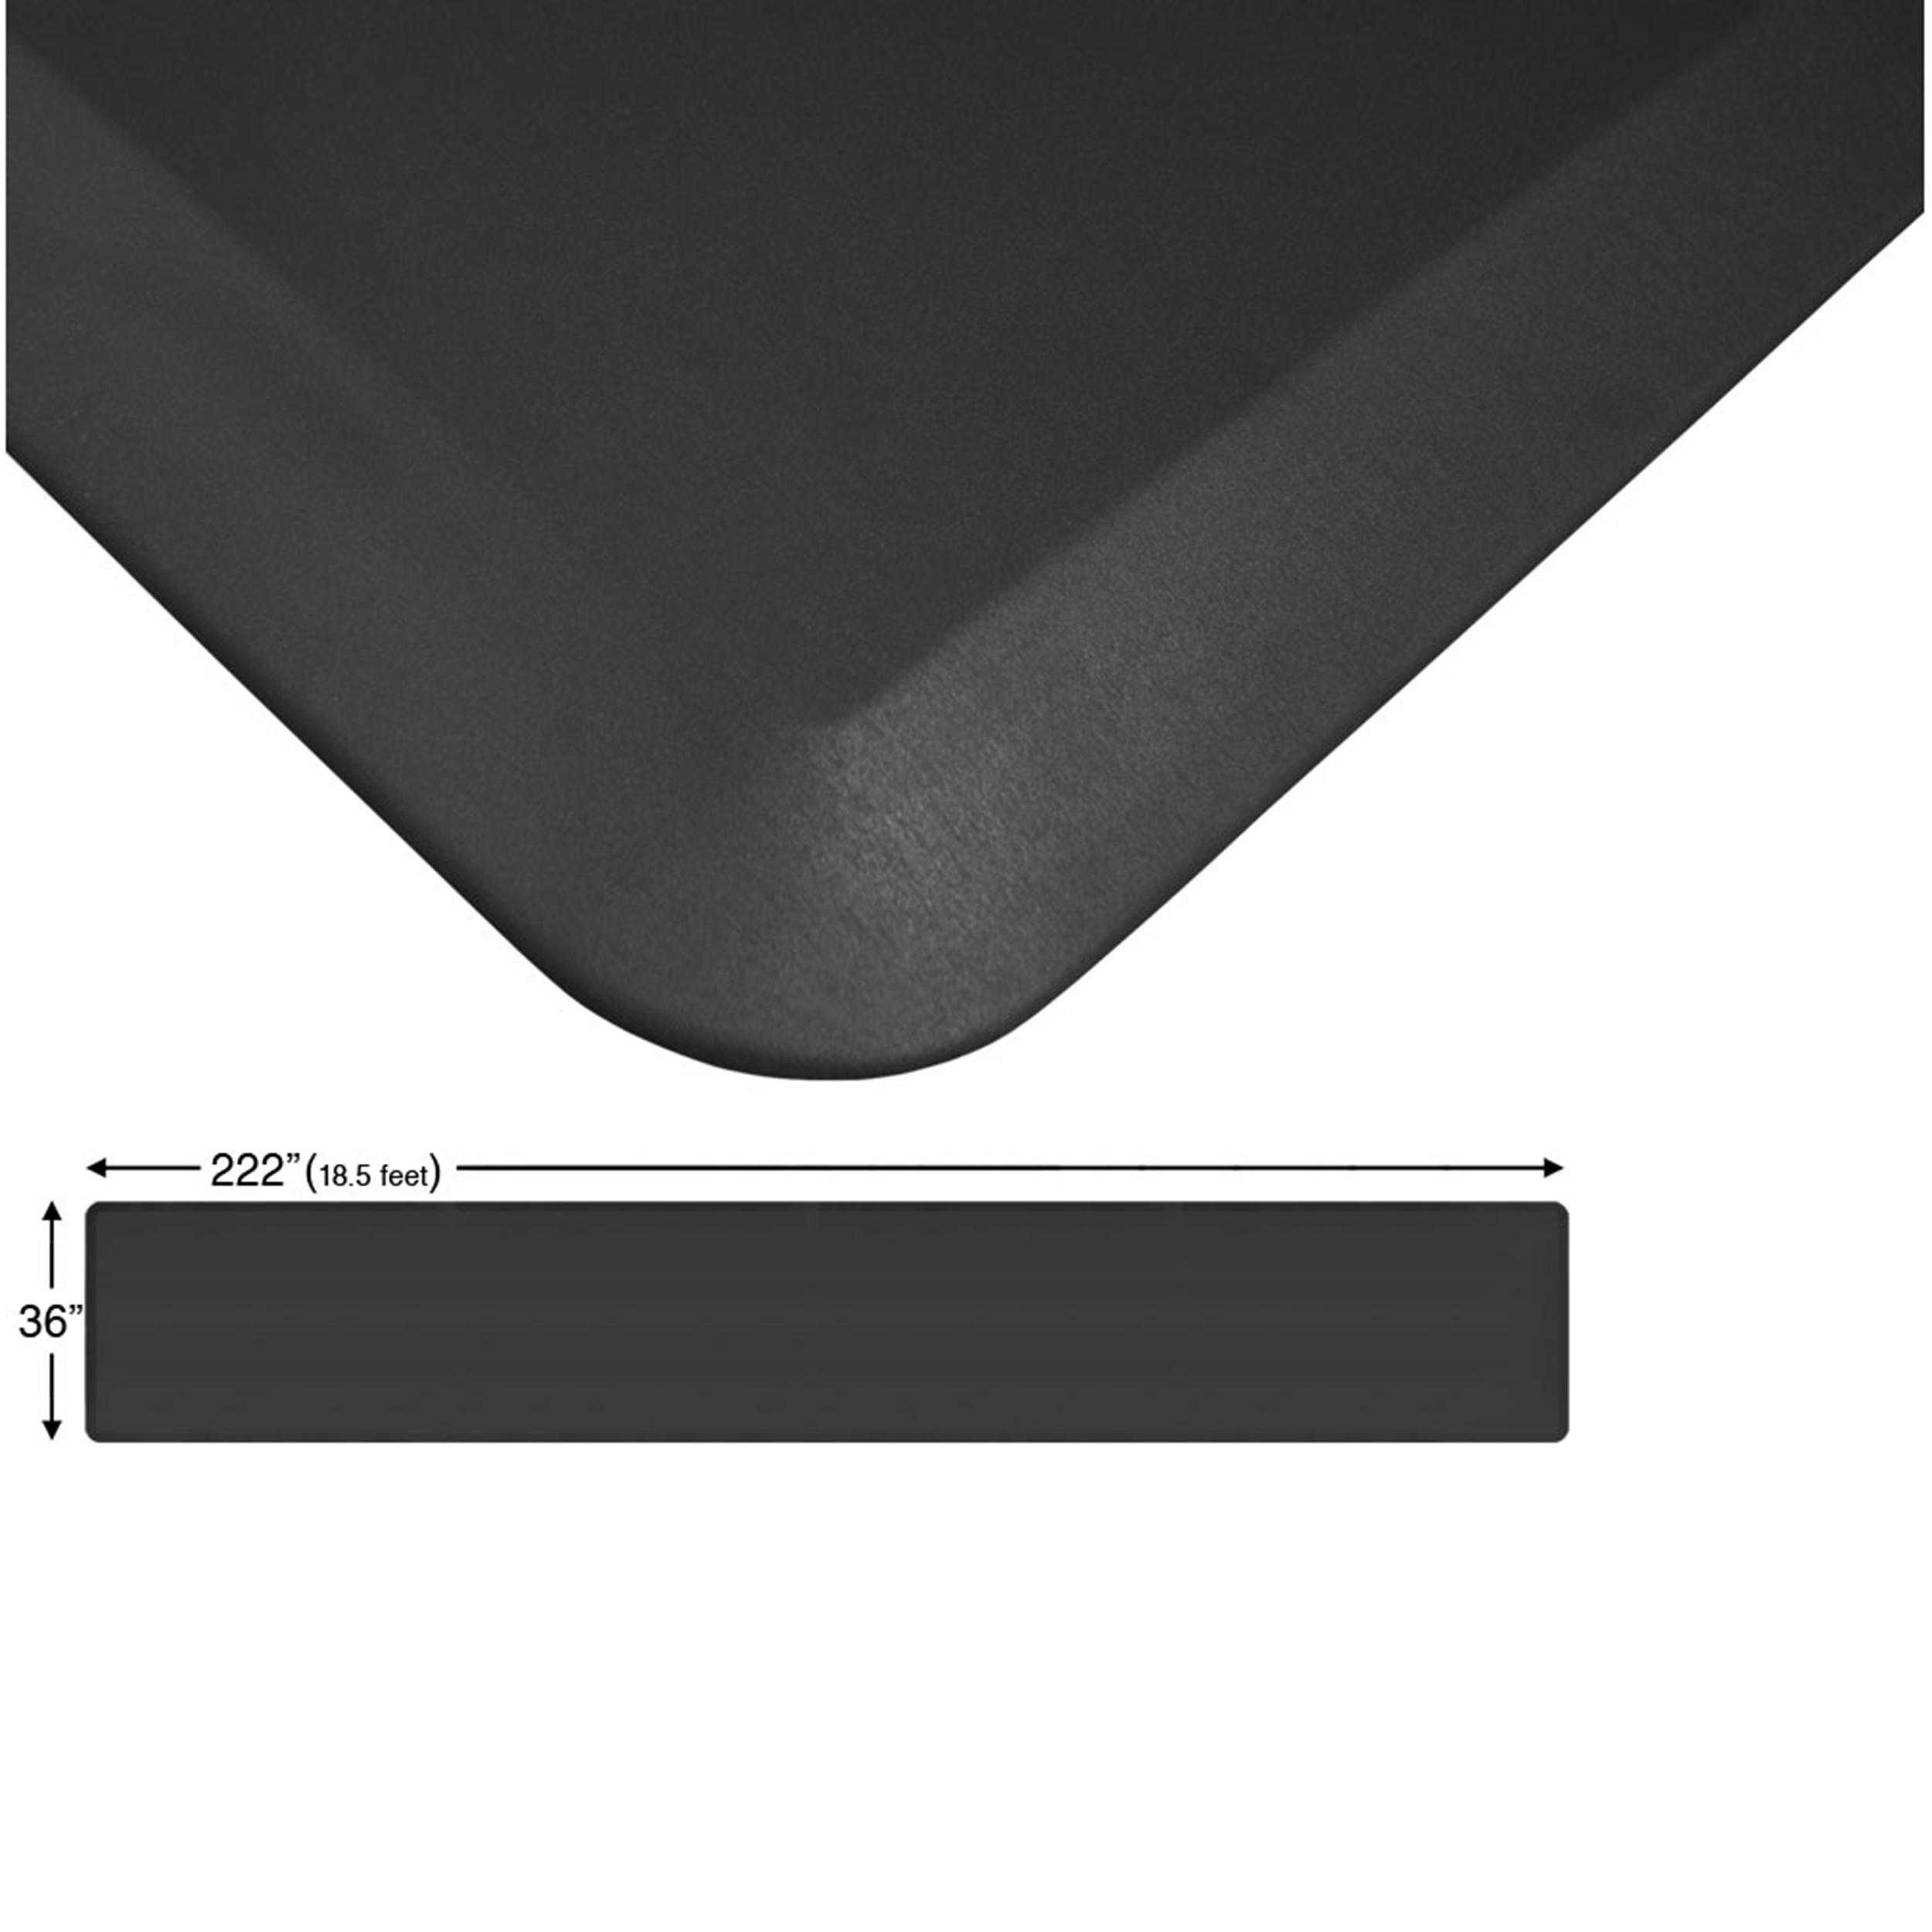 Eco-pro Continuous Comfort Mat, Black, 36" X 222"